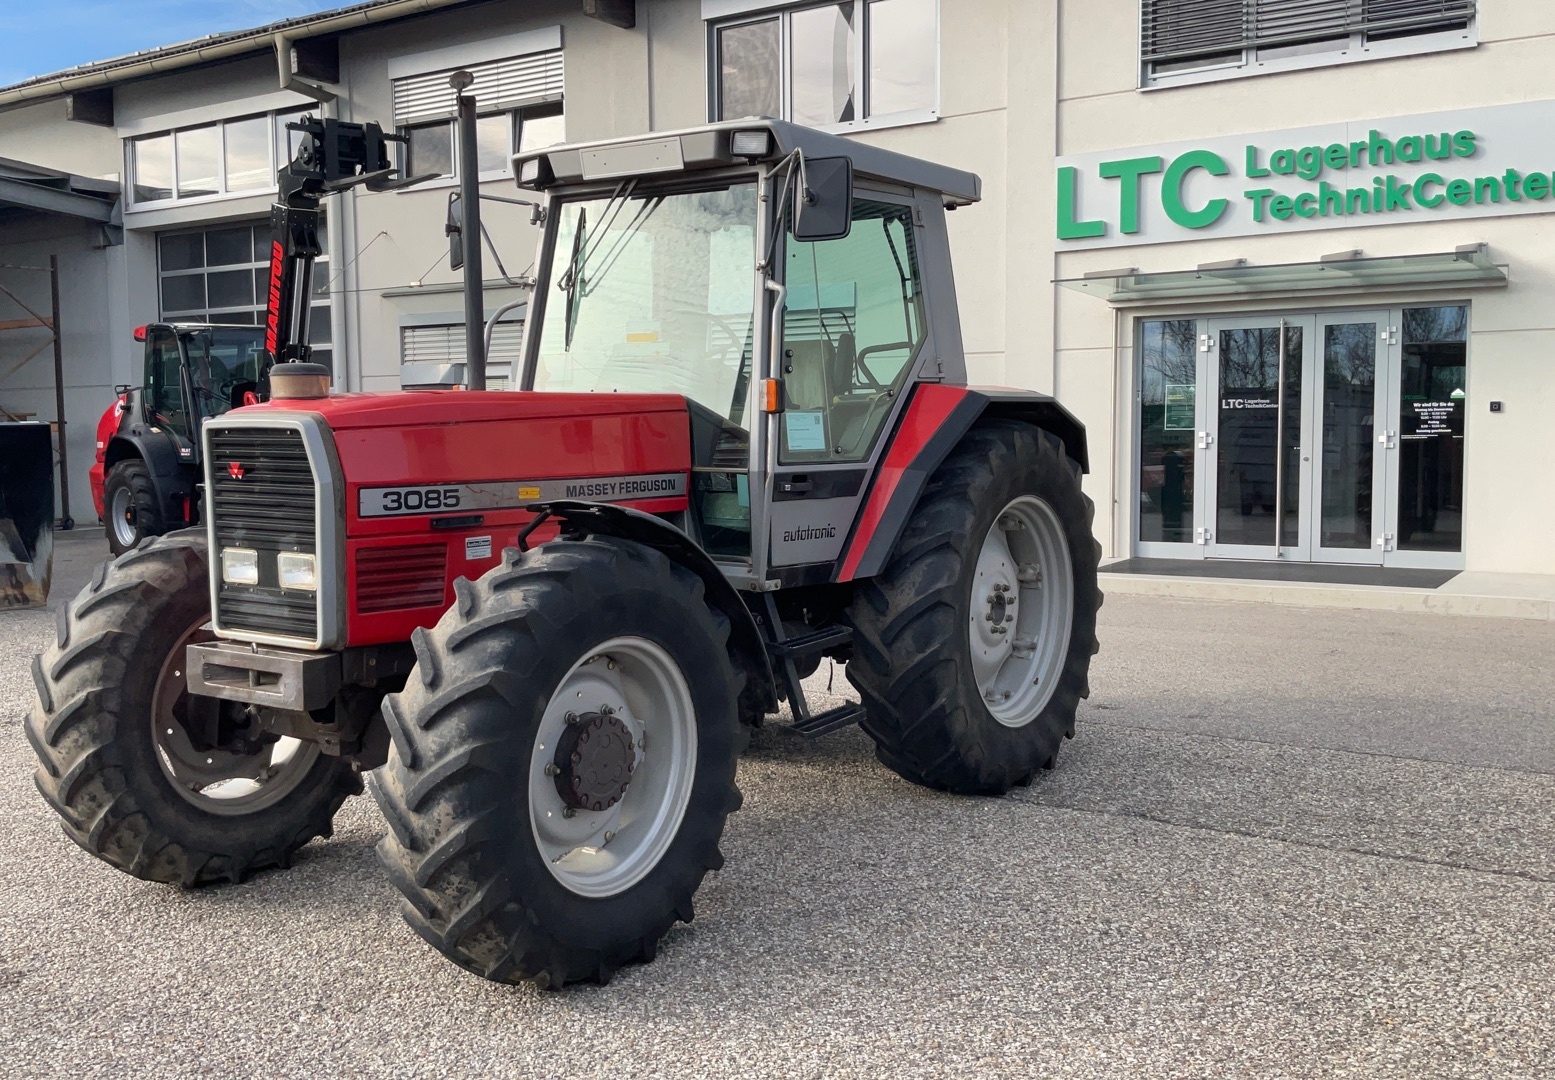 Massey Ferguson 3085 tractor €17,900